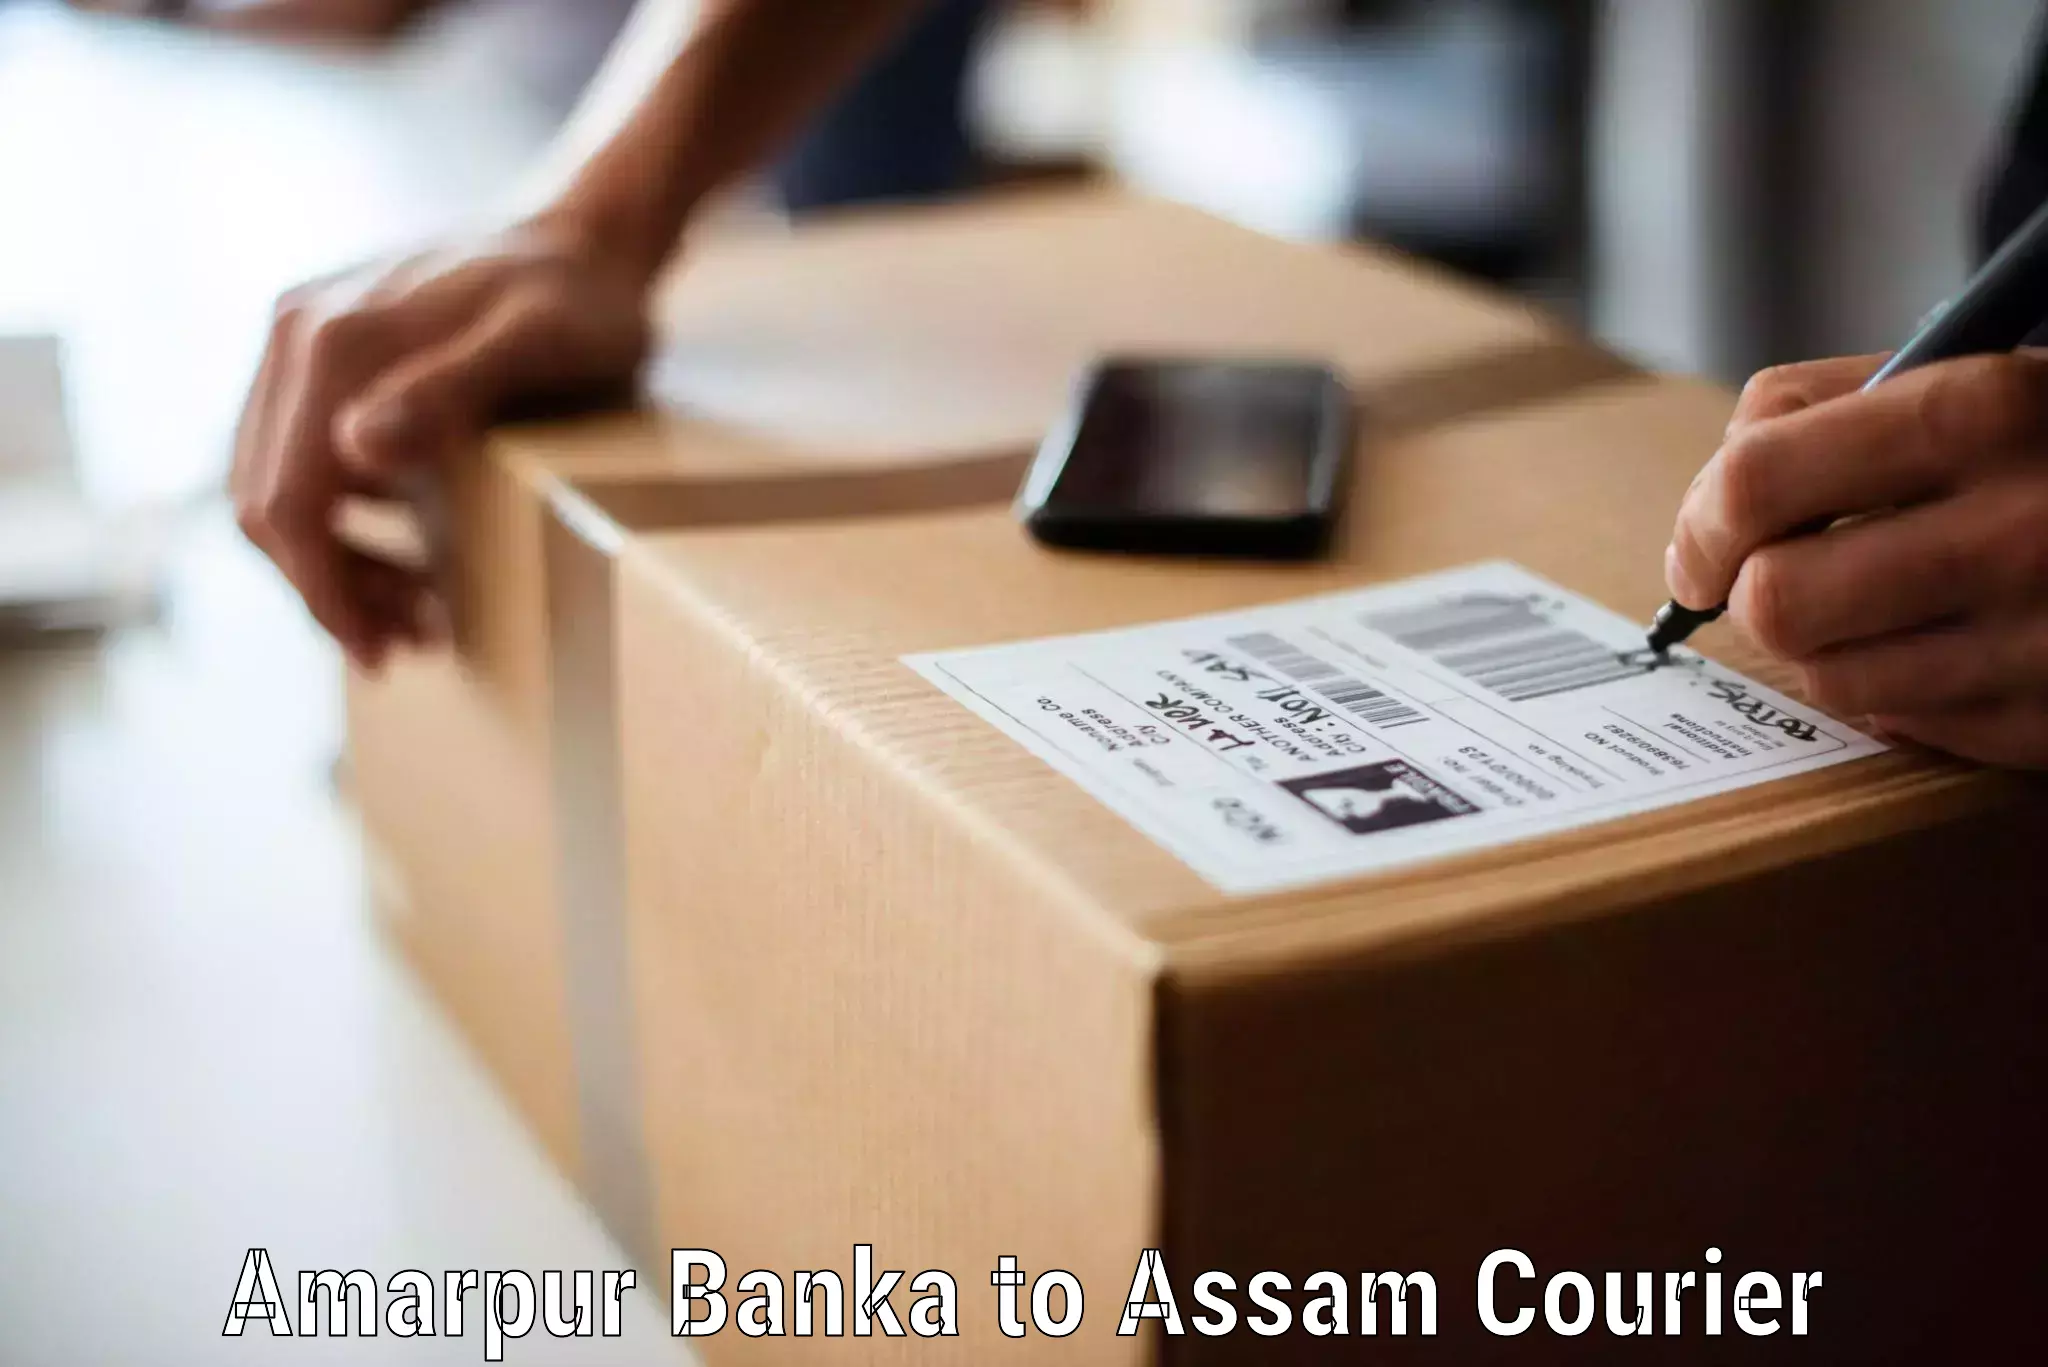 Efficient moving company Amarpur Banka to Duliajan